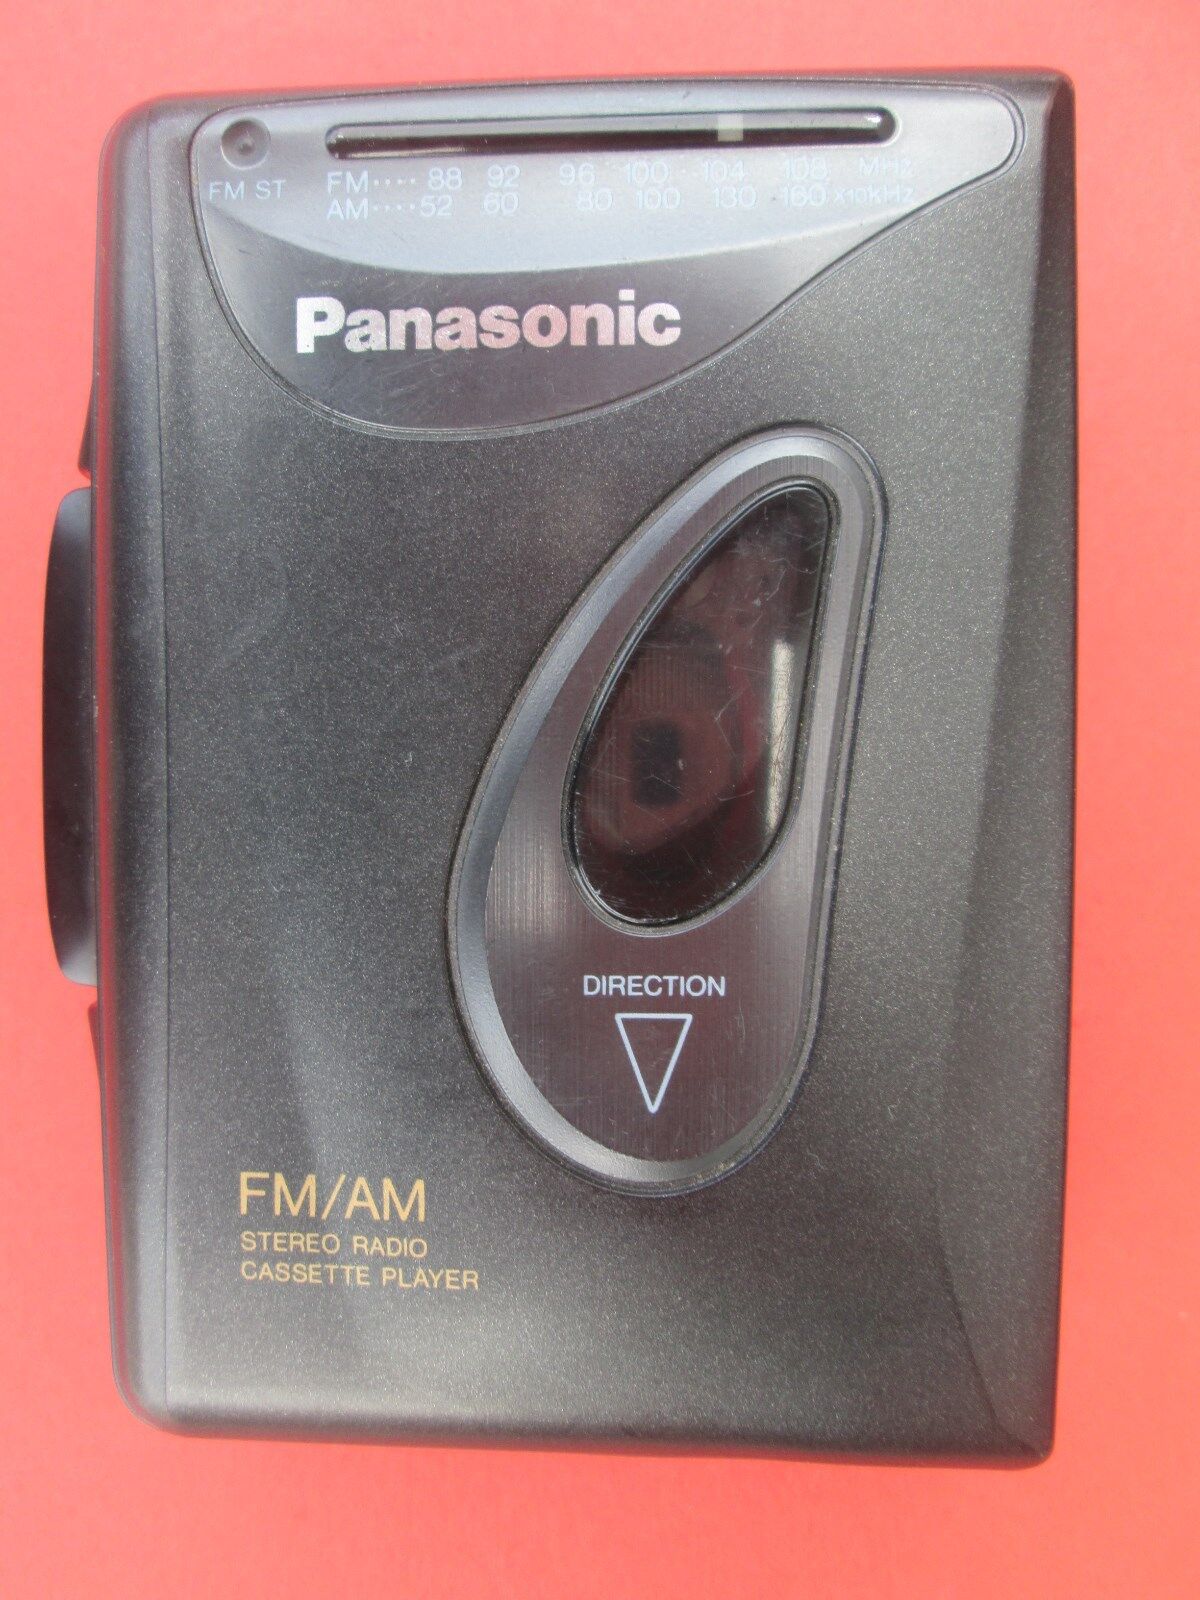 Panasonic Rq-v60 Cassette Player Am/fm Radio - Walkman